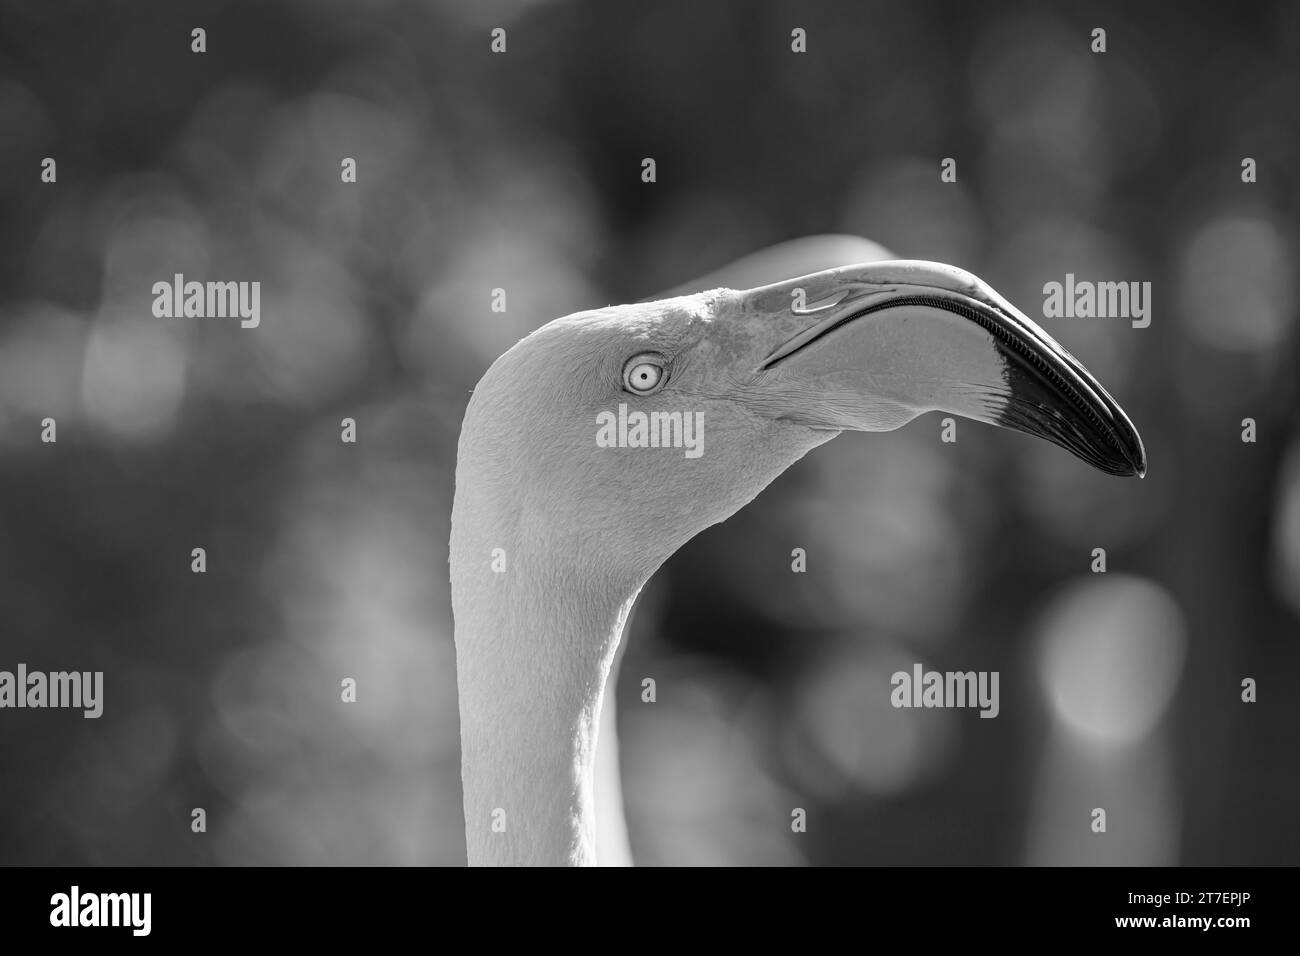 Closeup  Portrait of a flamingo face Stock Photo